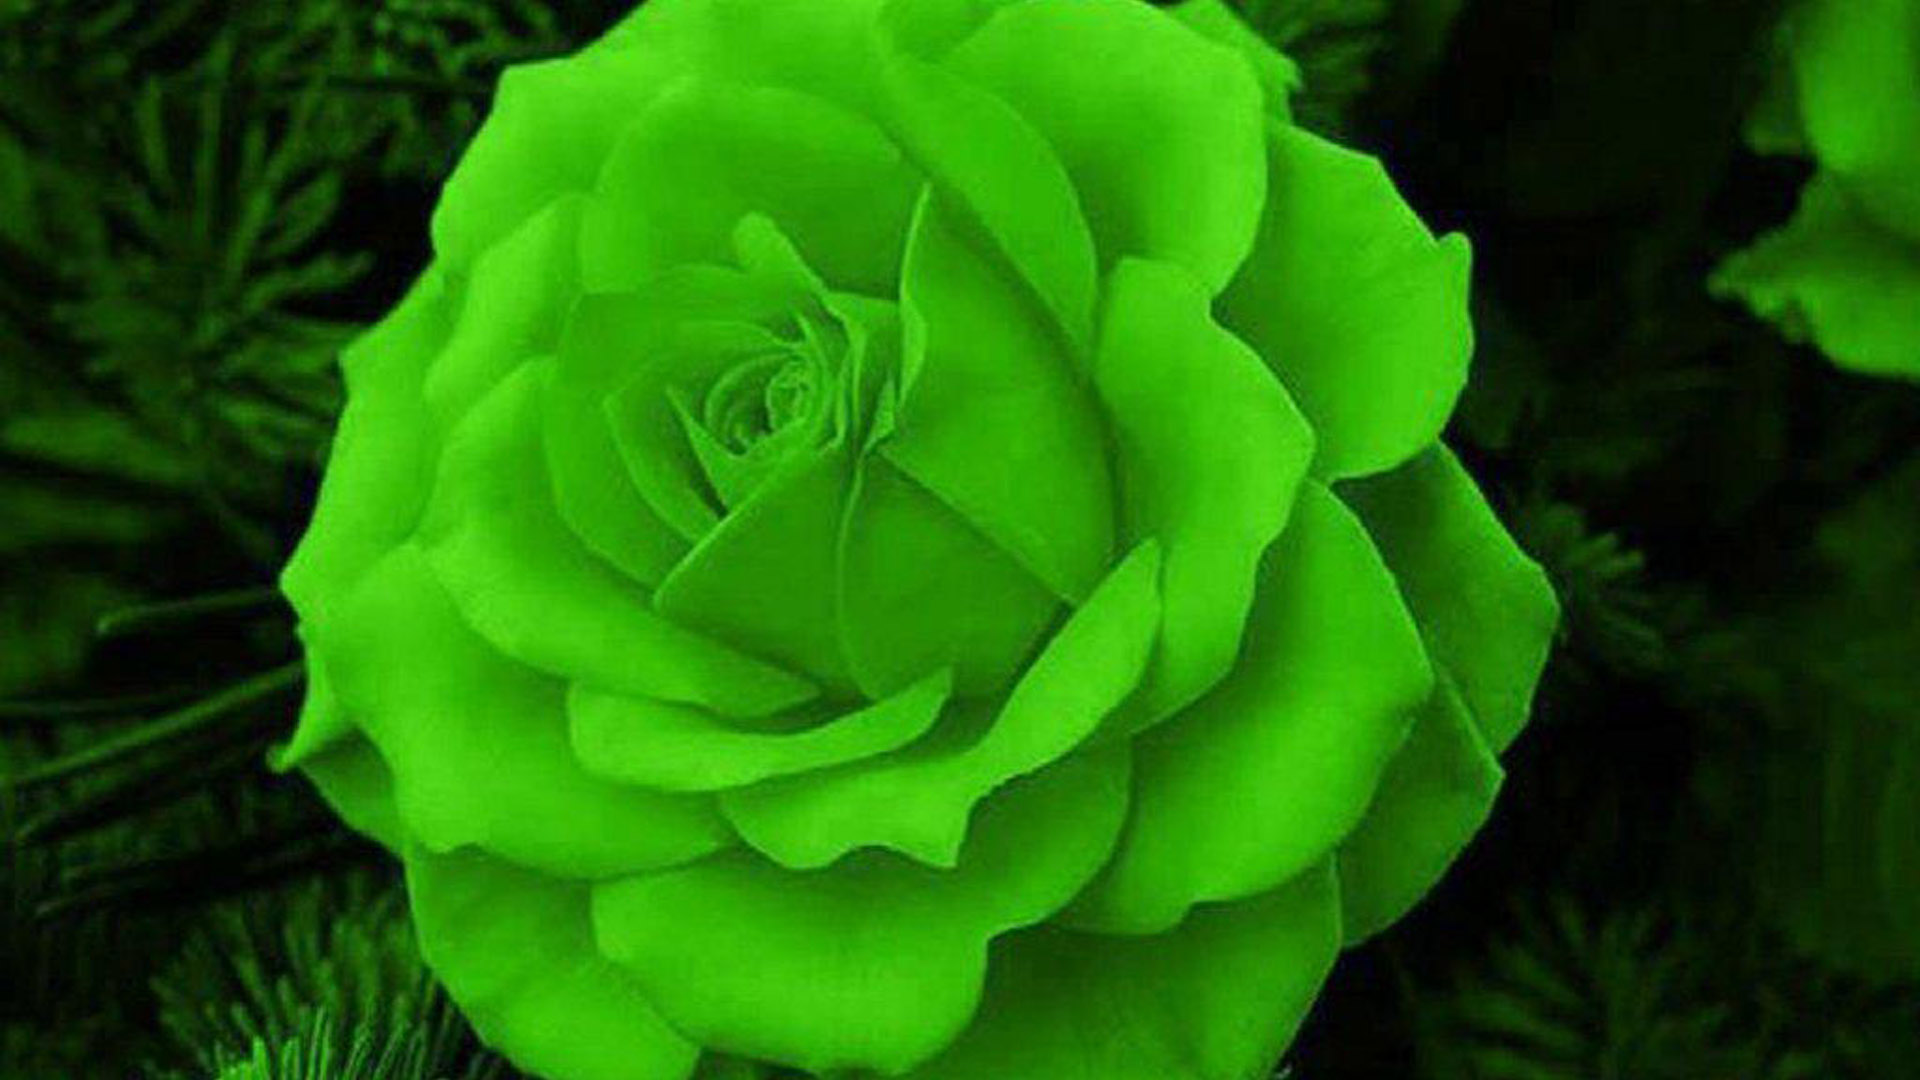 Green Rose Wallpaper